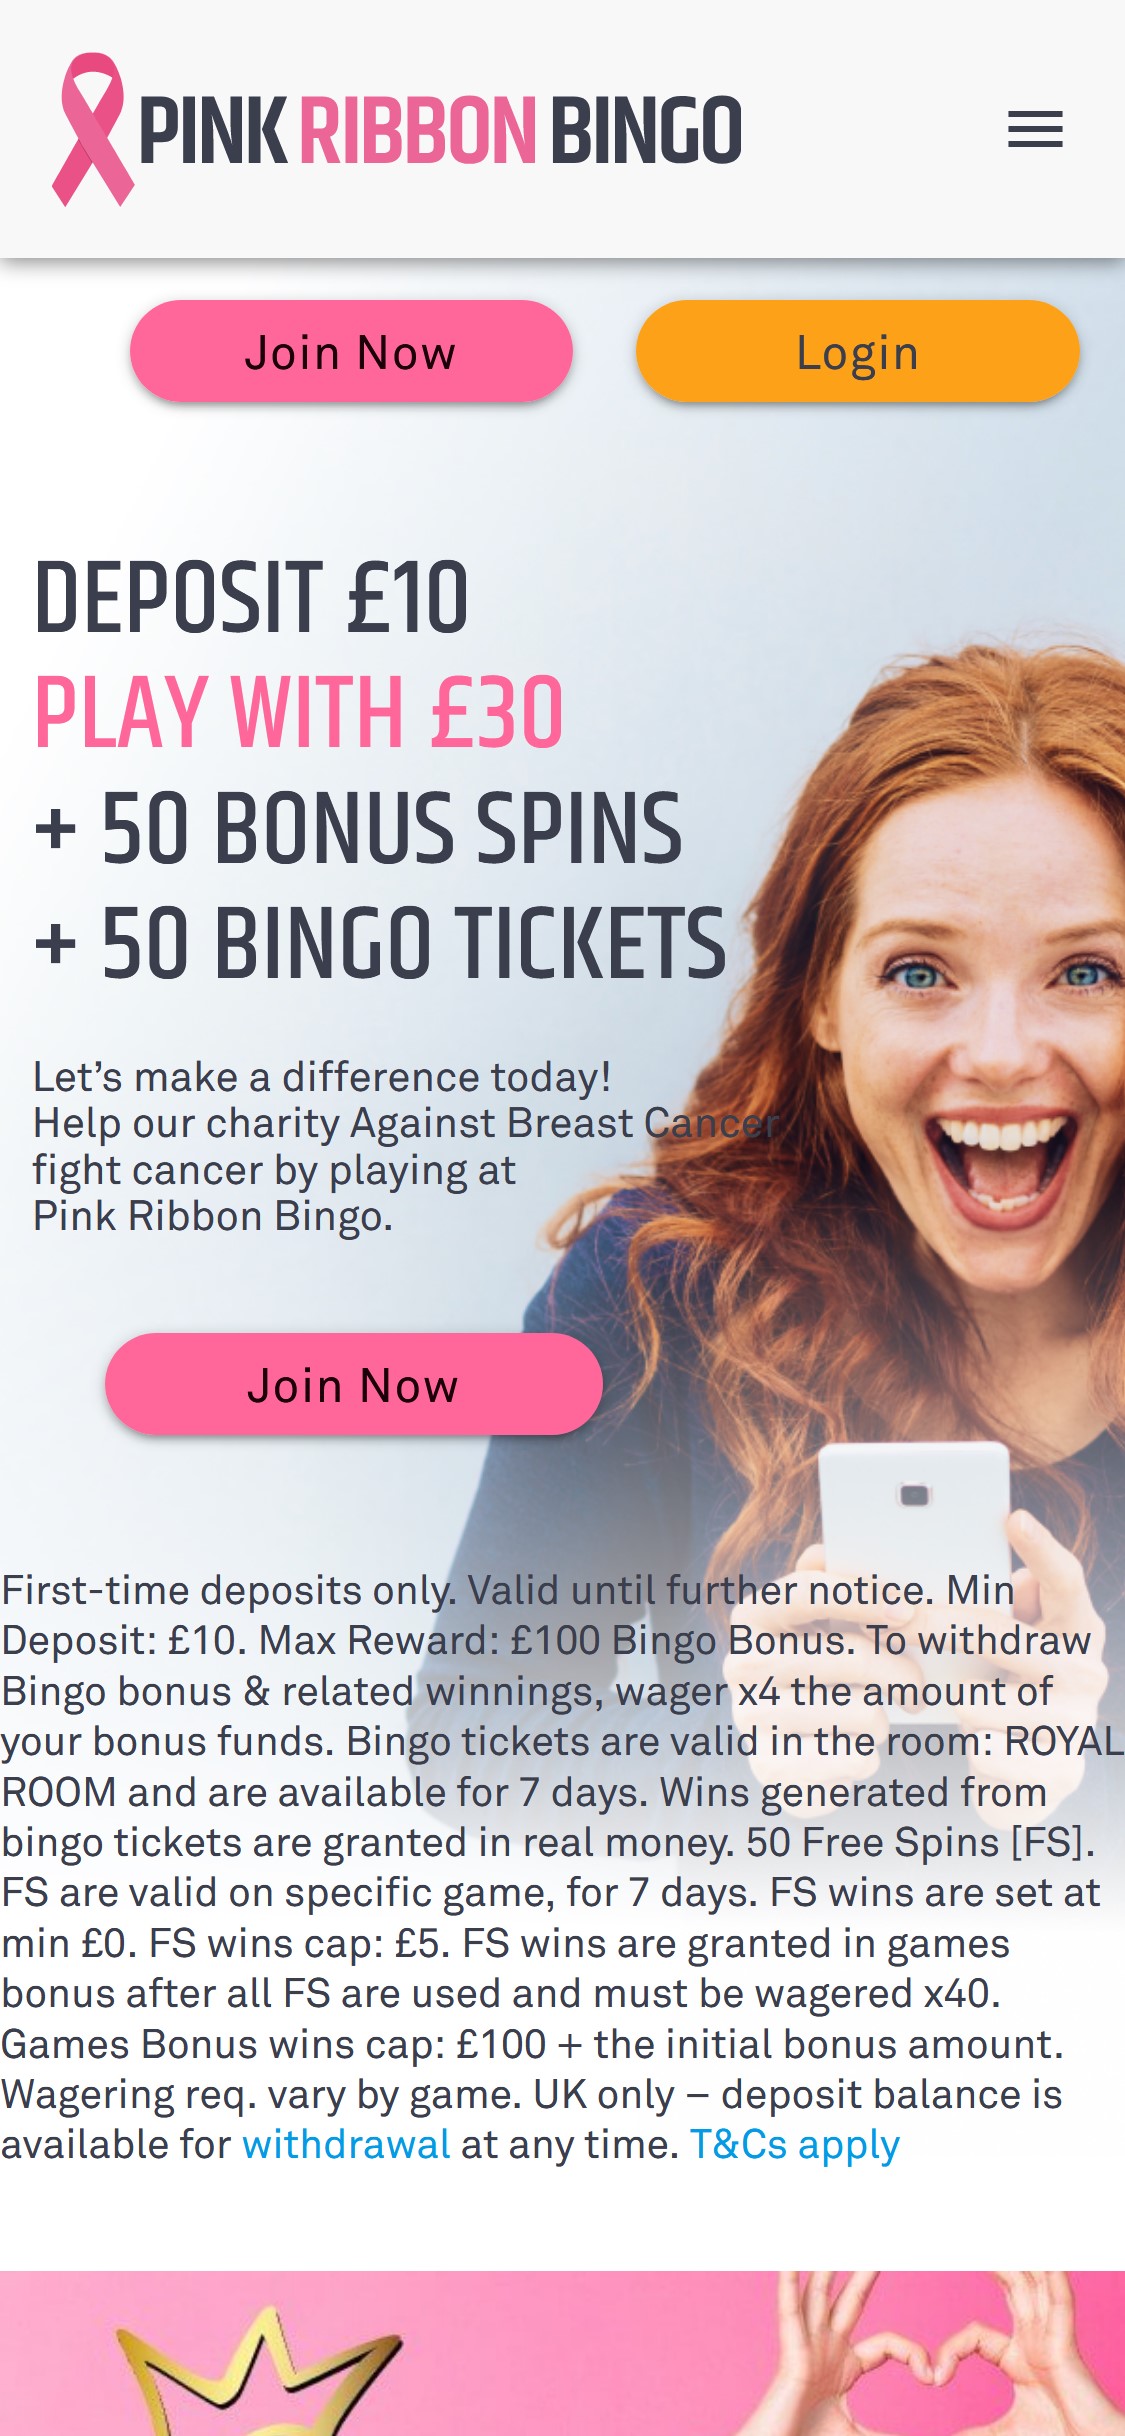 Pink Ribbon Bingo Casino Mobile Review